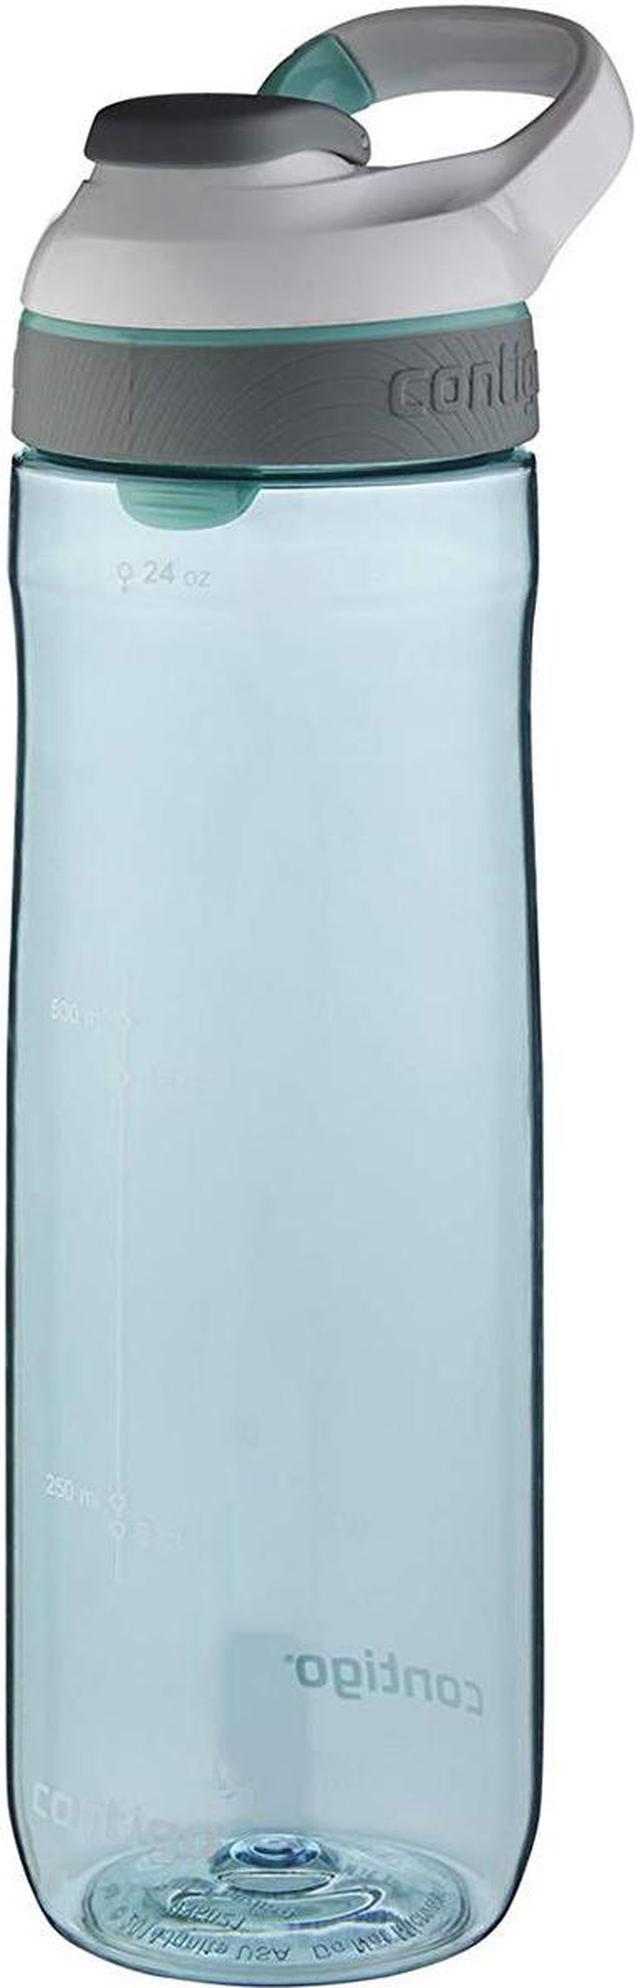 Contigo 24 oz. Cortland Autoseal Water Bottle - Grayed Jade/Bone